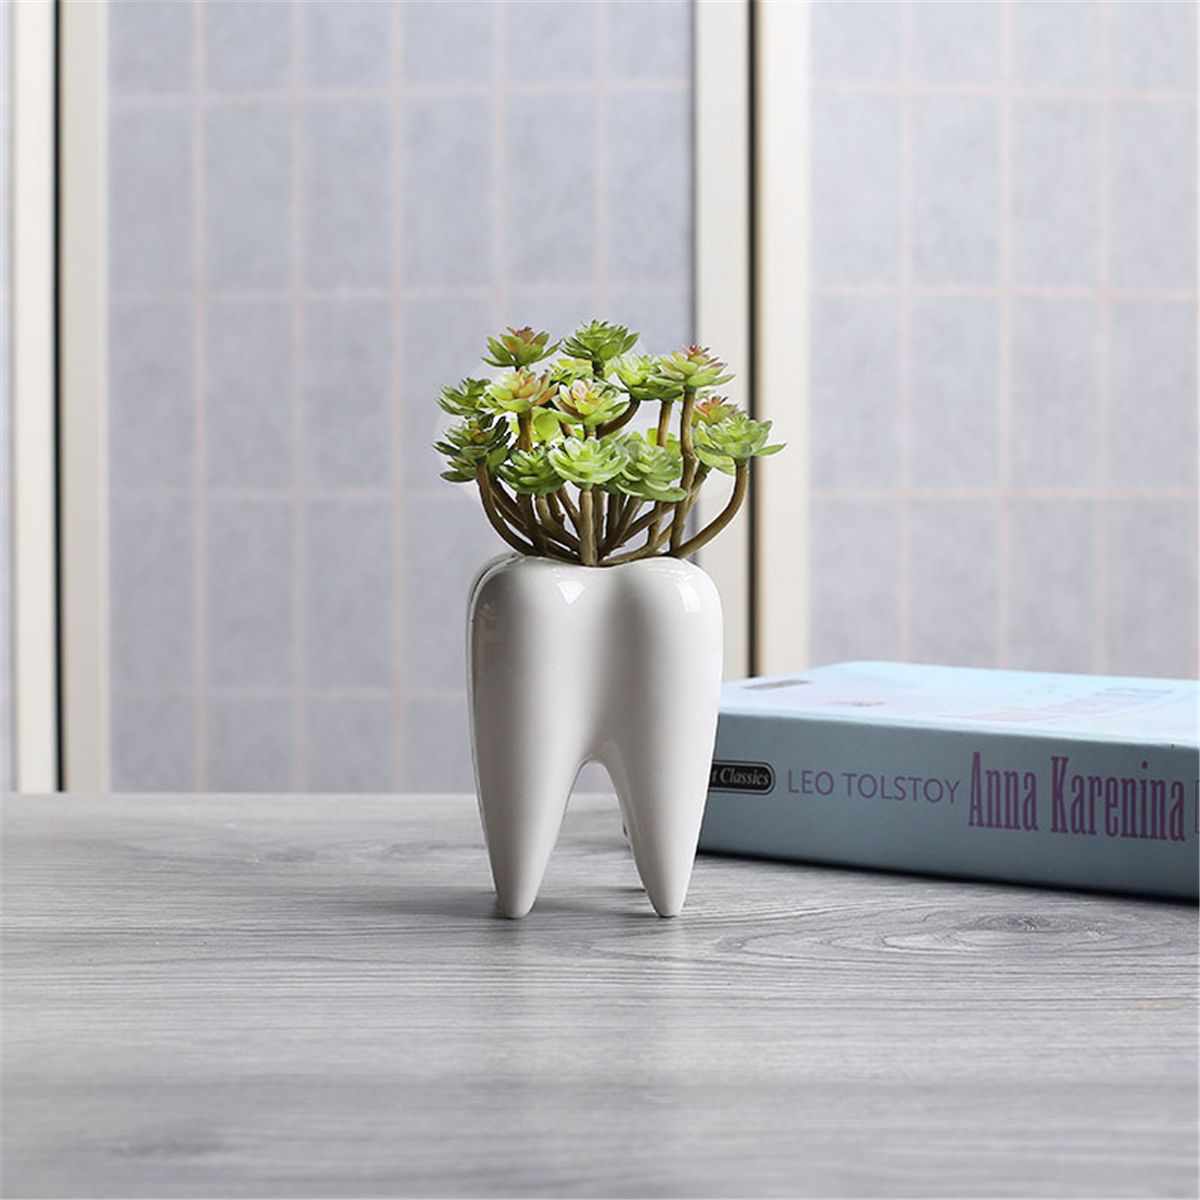 2Pcs-Ceramic-Plant-Flower-Pot-Succulent-Garden-Cute-Teeth-White-Home-Decorative-Storage-Container-1339551